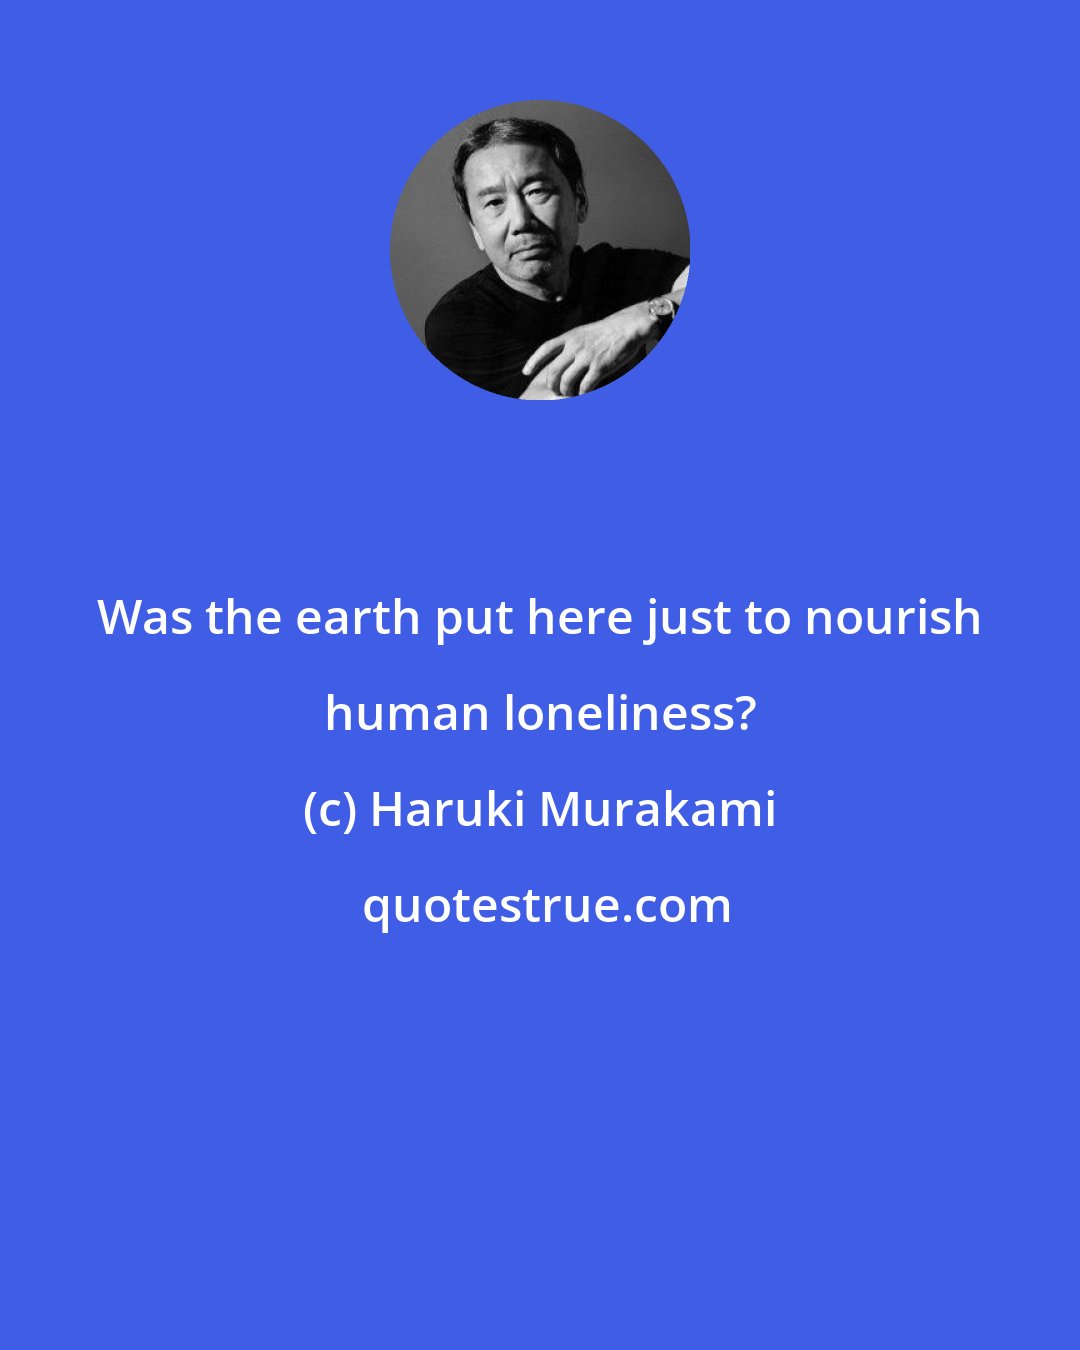 Haruki Murakami: Was the earth put here just to nourish human loneliness?